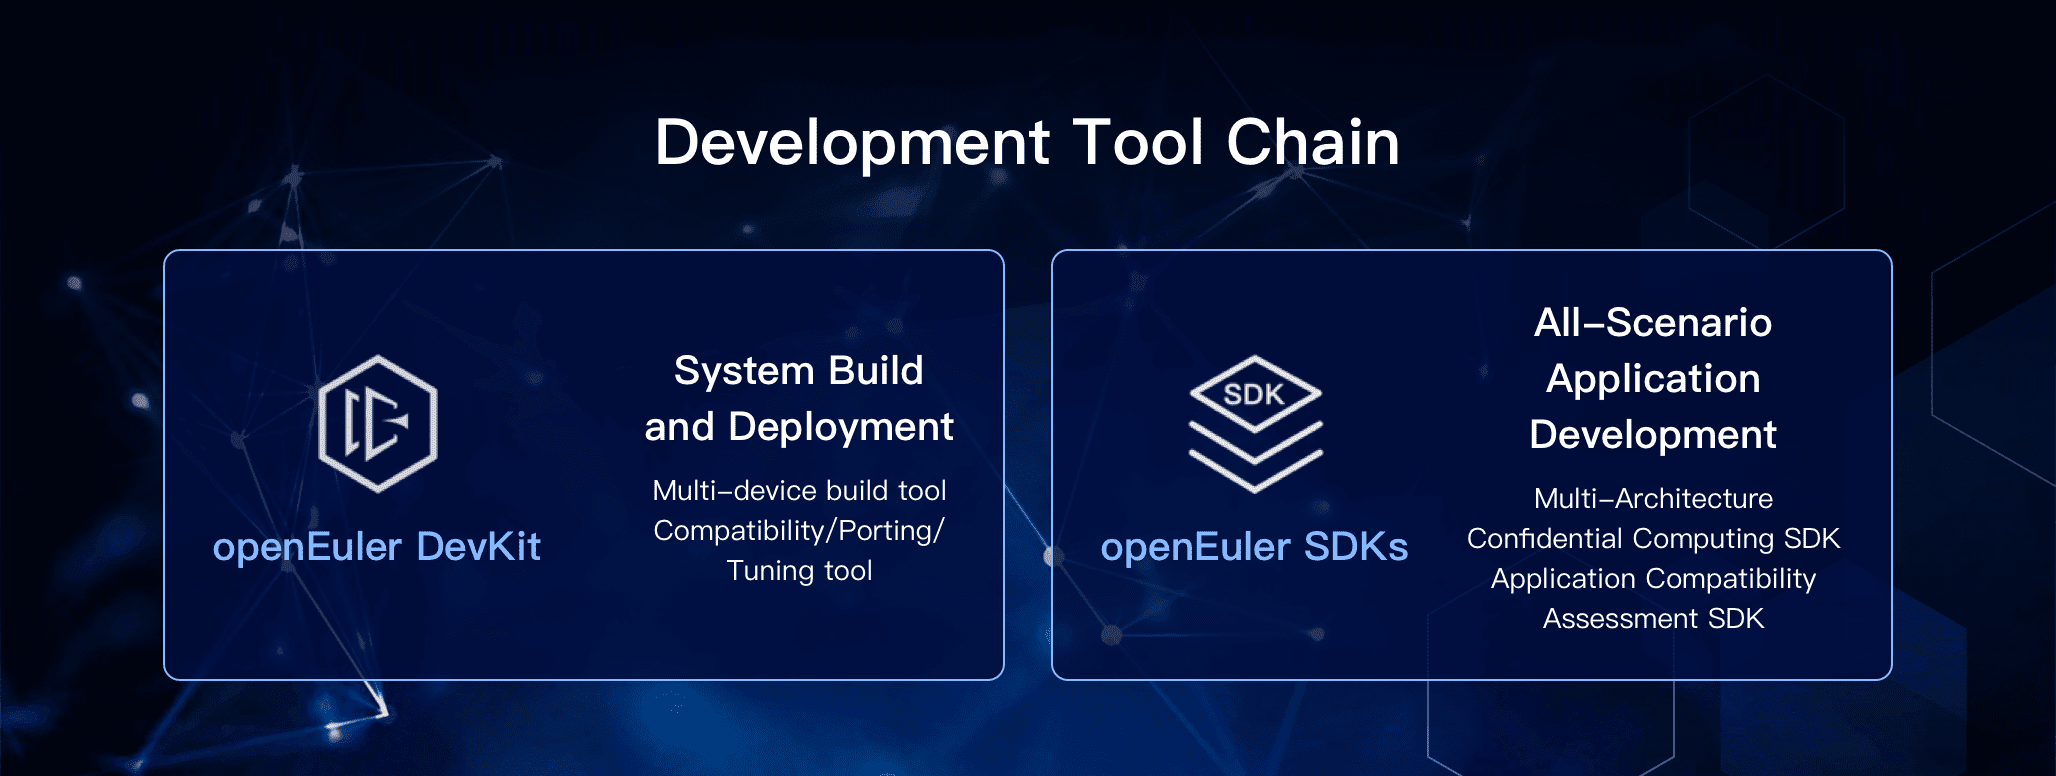 Development Tool Chain